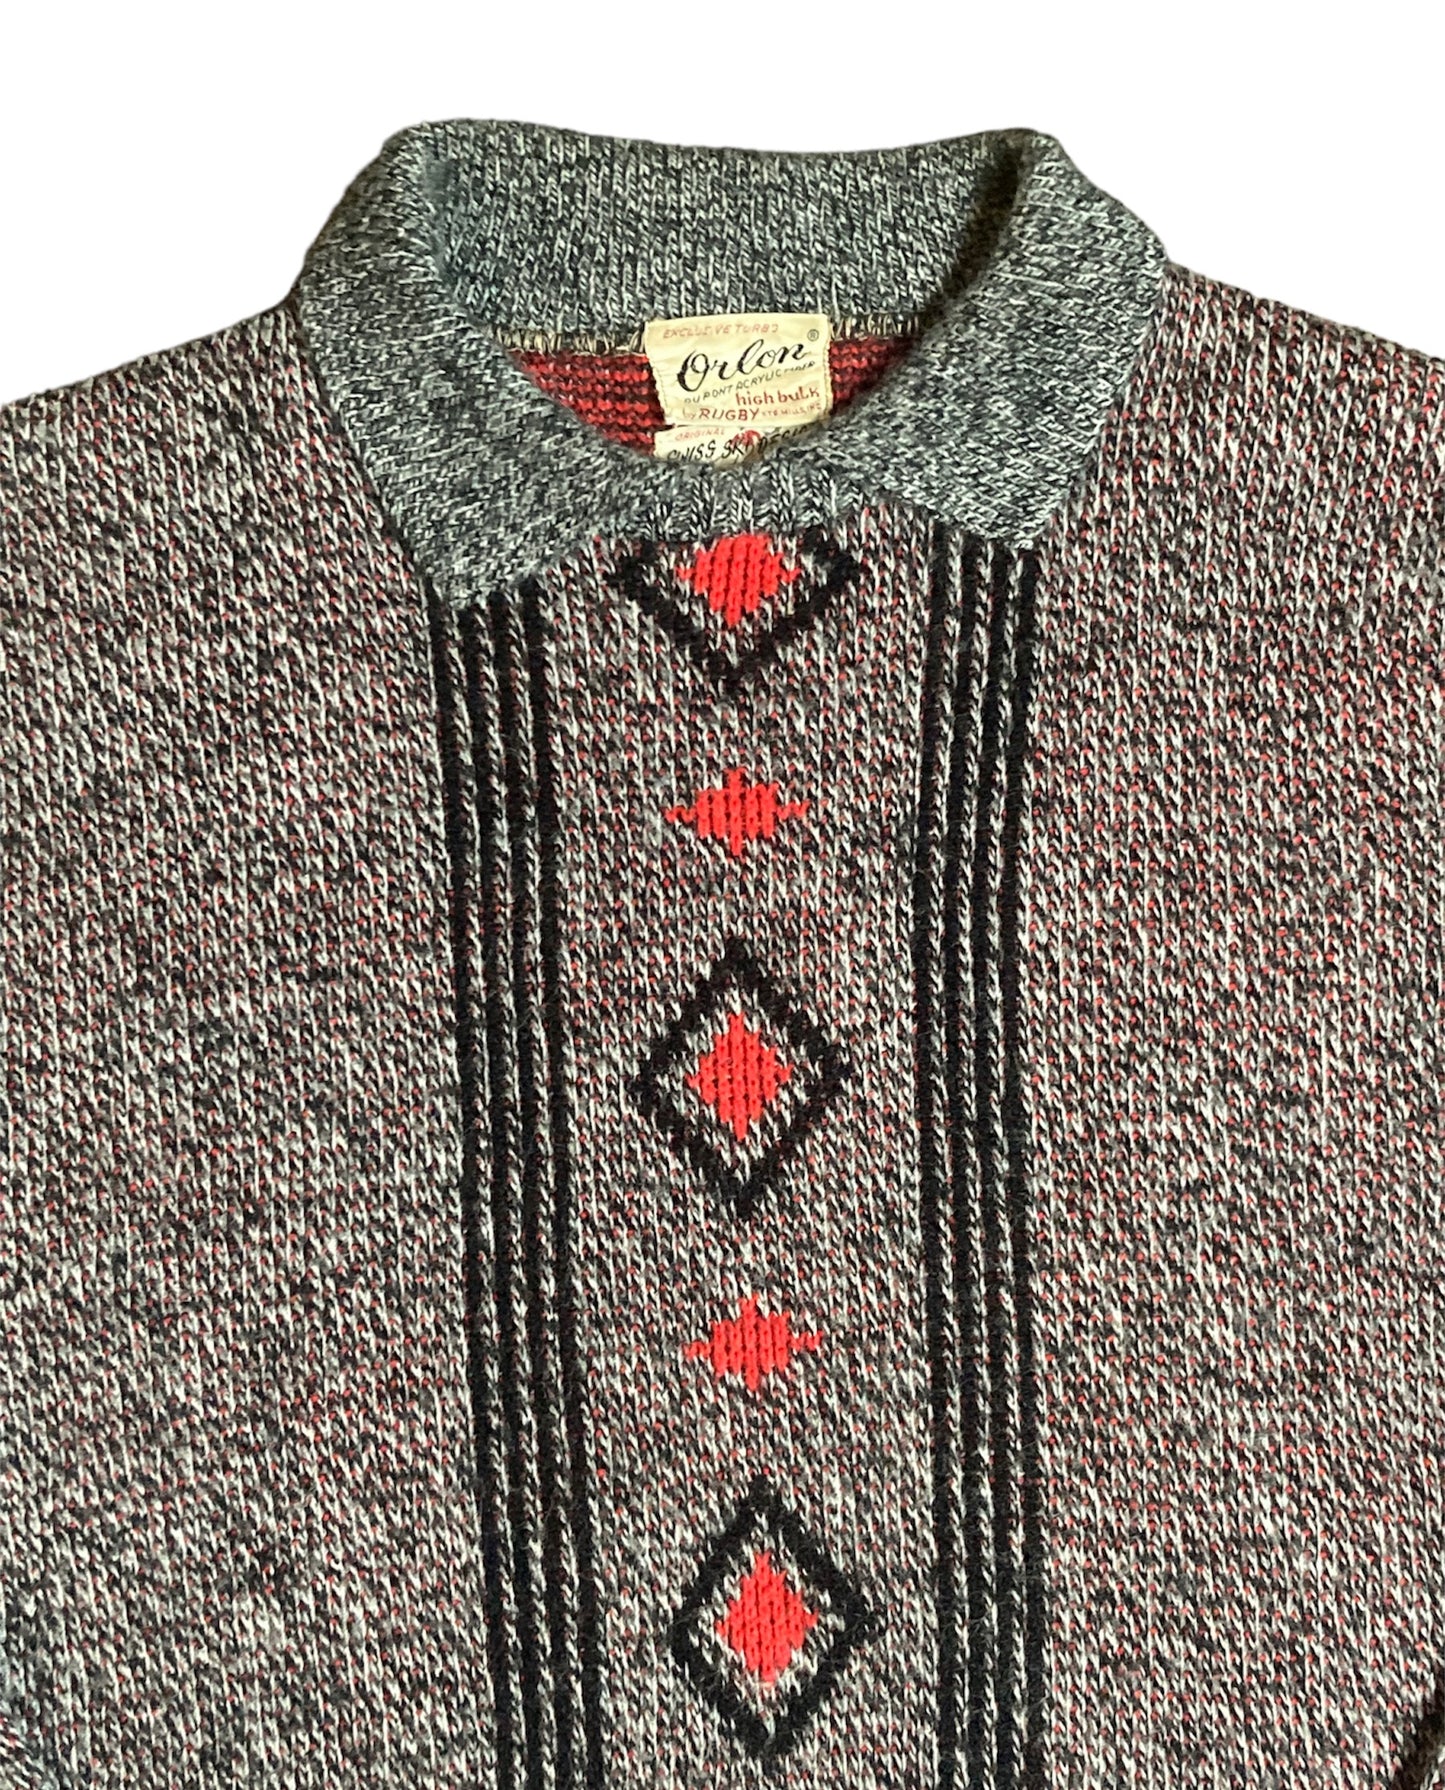 Vintage 1940s Hansi Orlon Ski Sweater